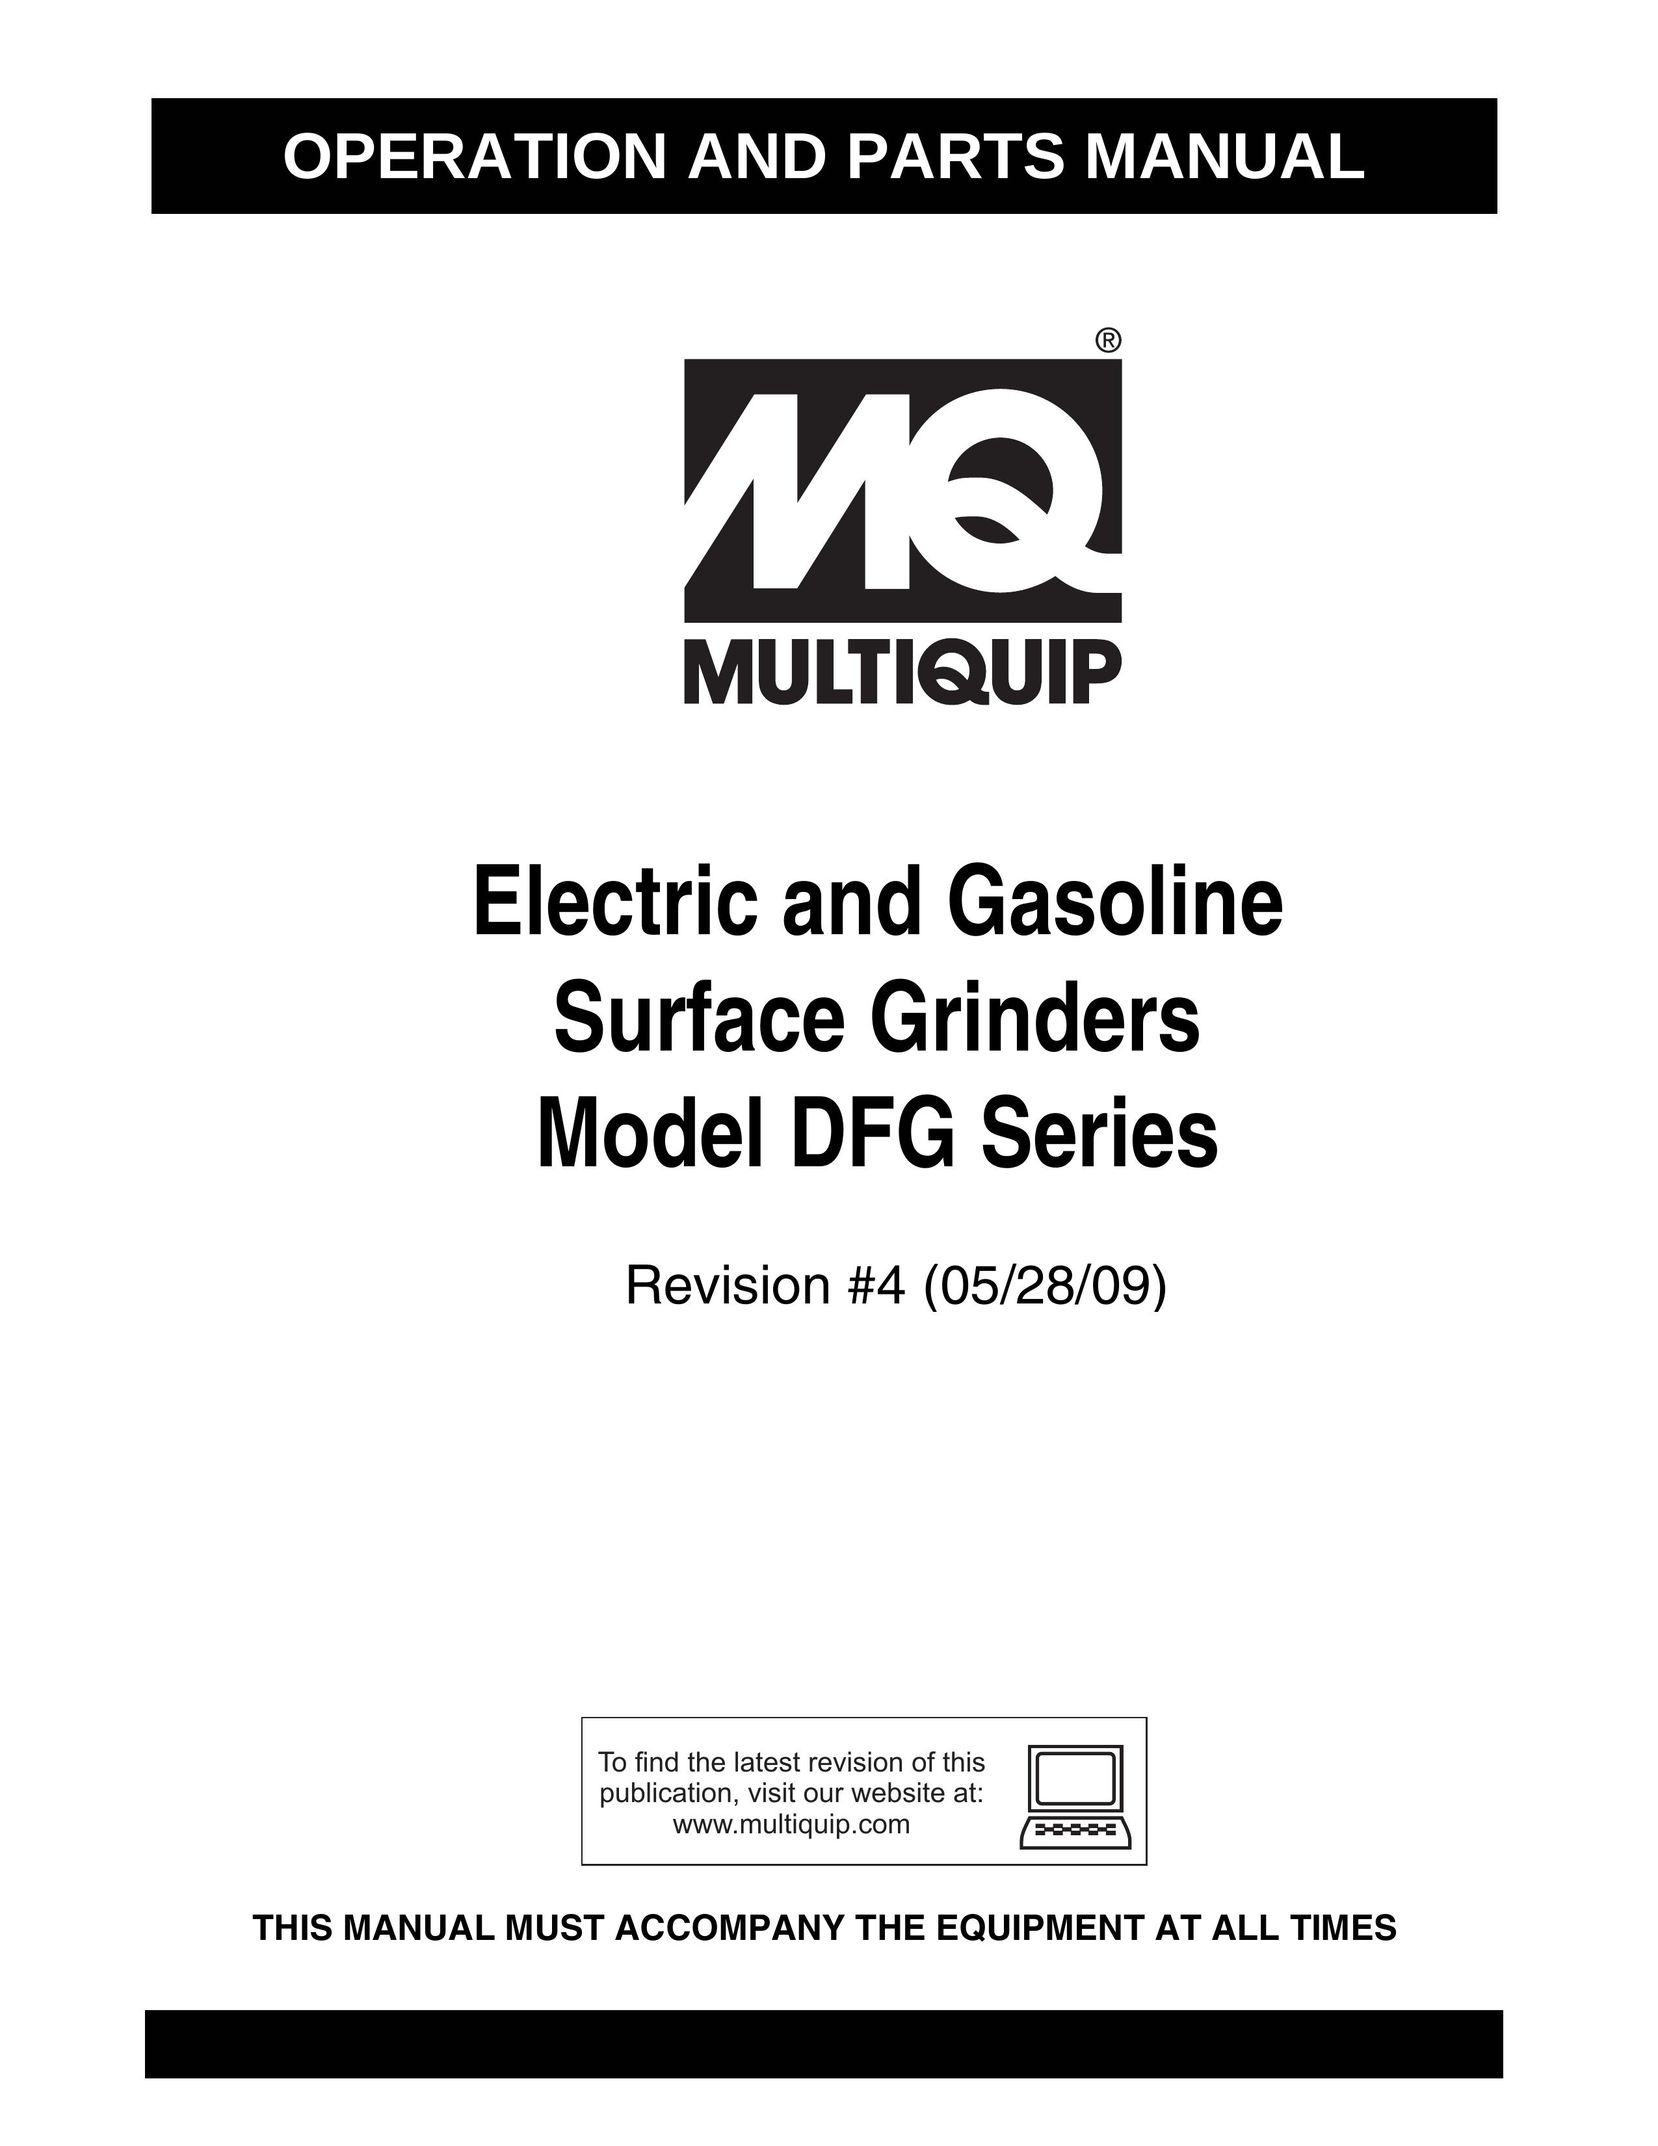 Multiquip DFG Series Grinder User Manual